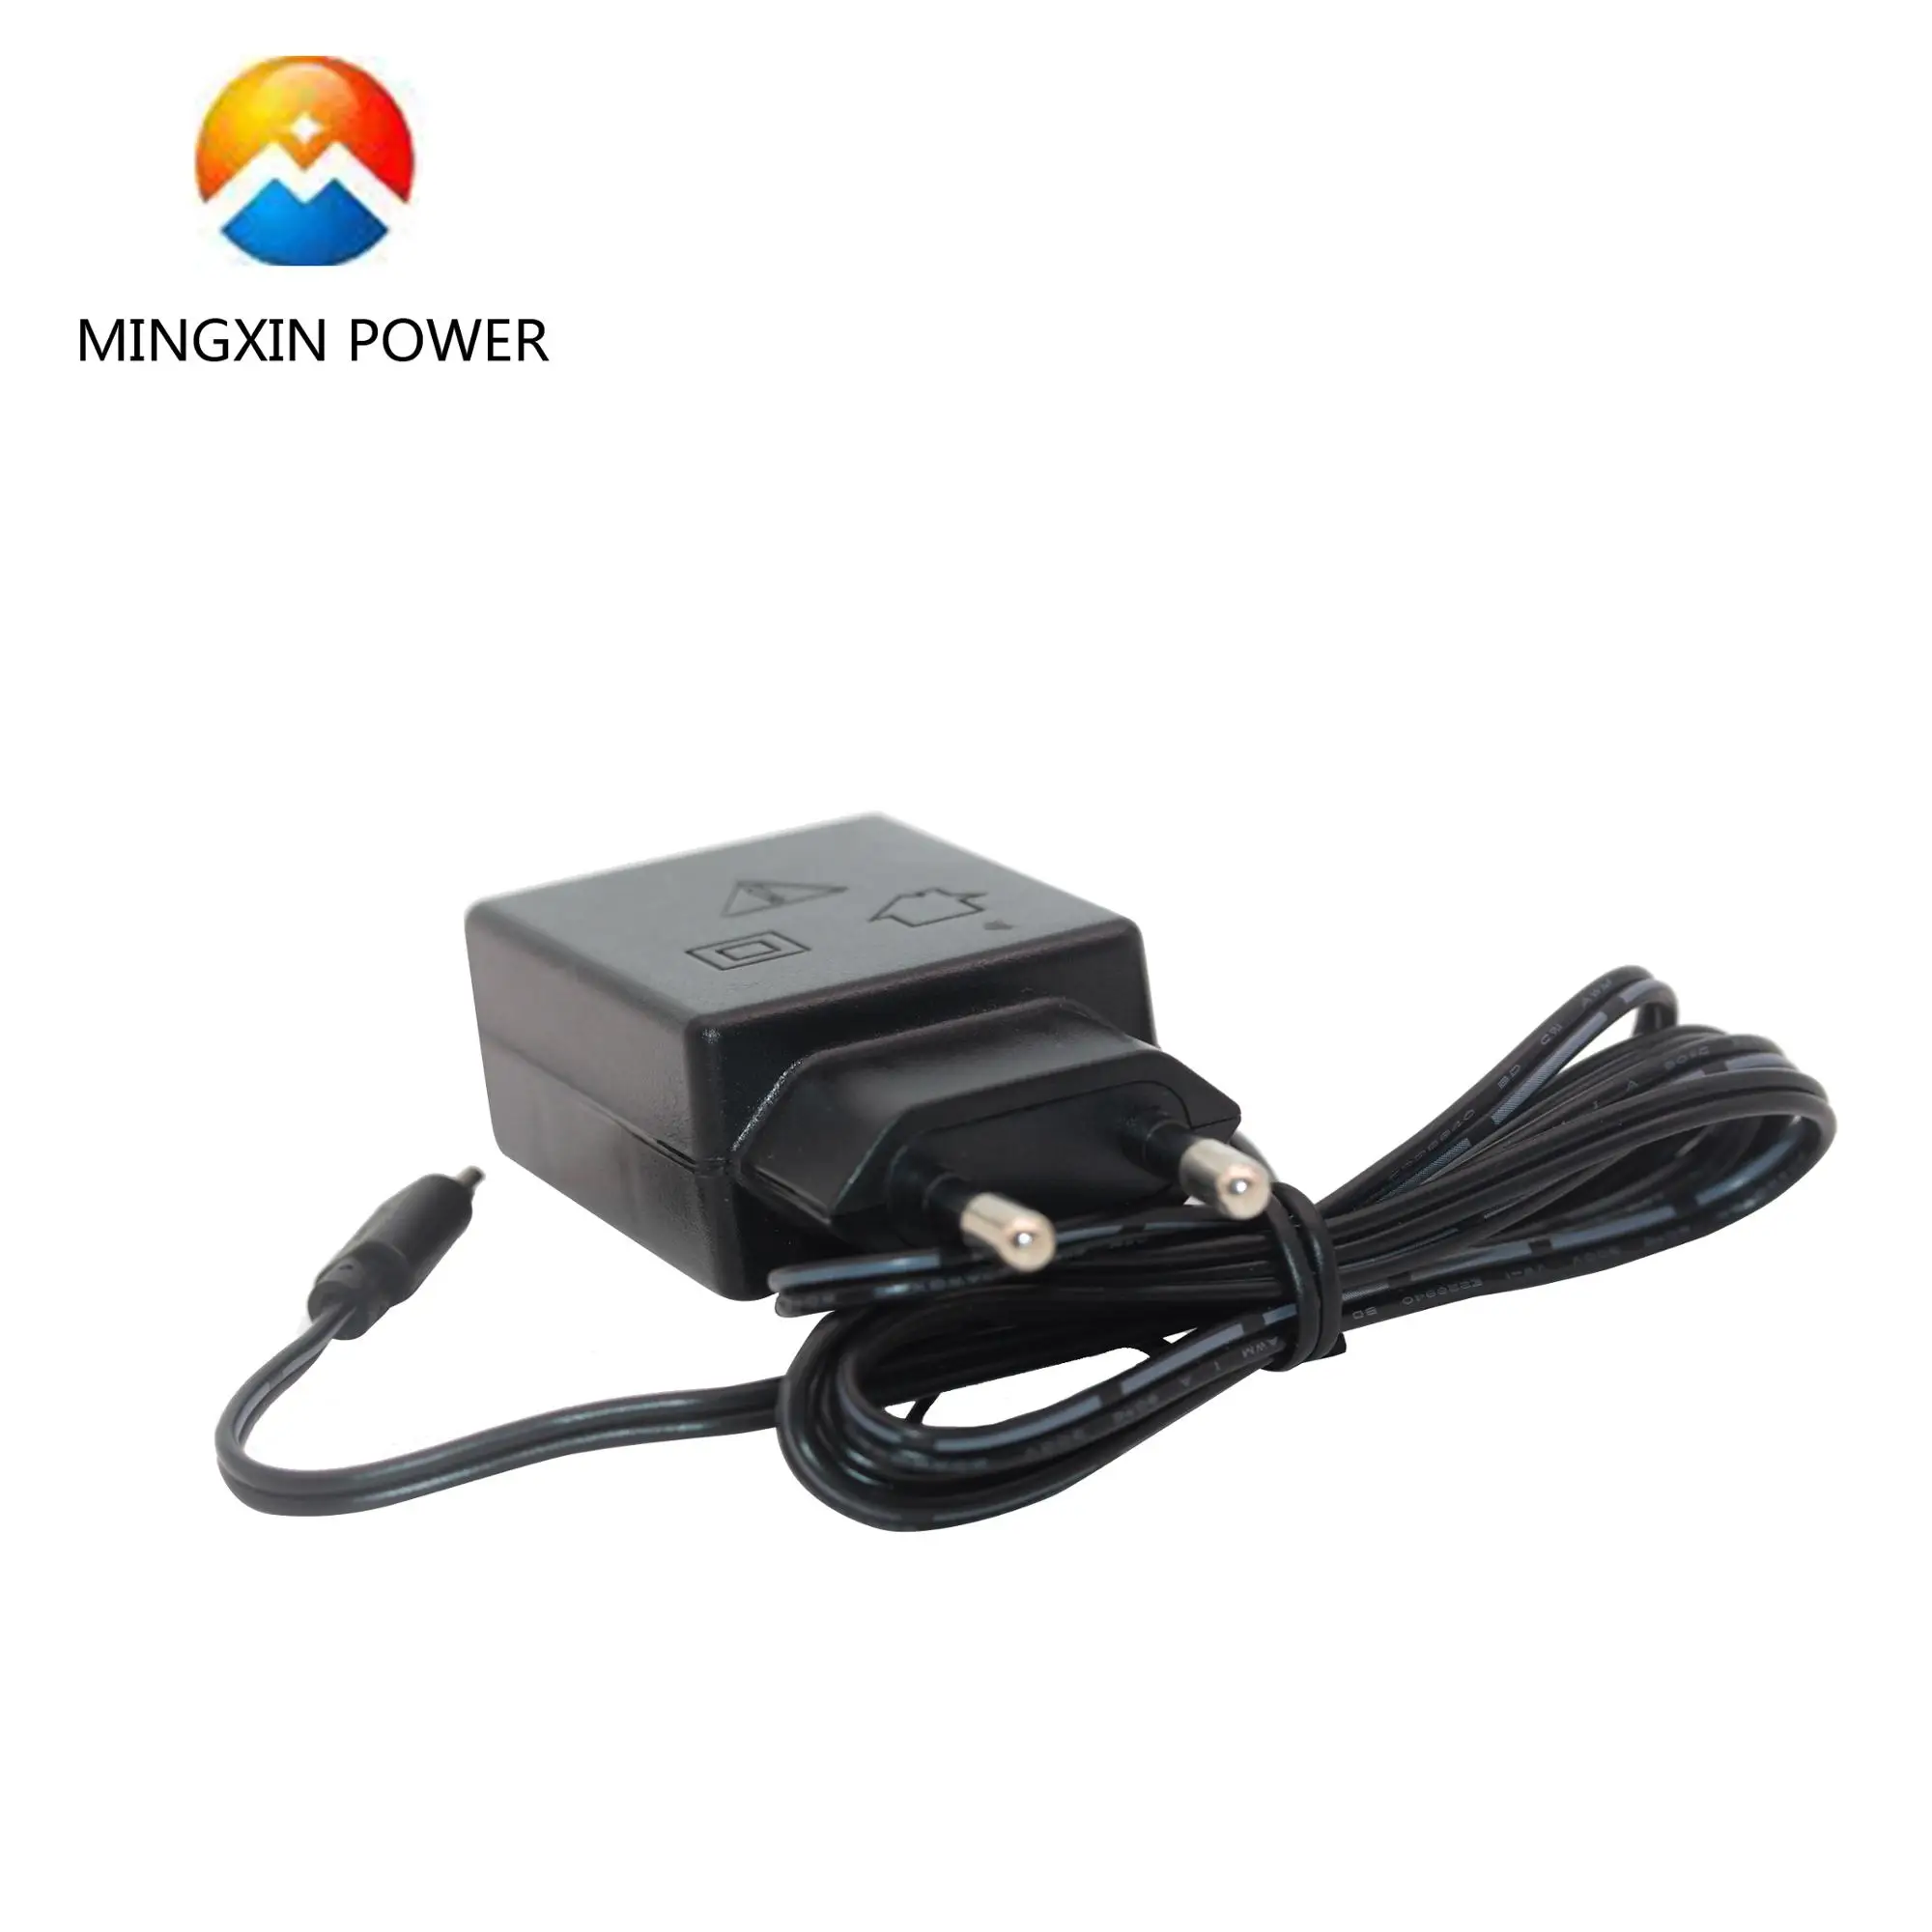 Kc Certification 19v 1.2a 1.6a Power Adapter For Lg Lcd Buy Power Adapter For Led Light